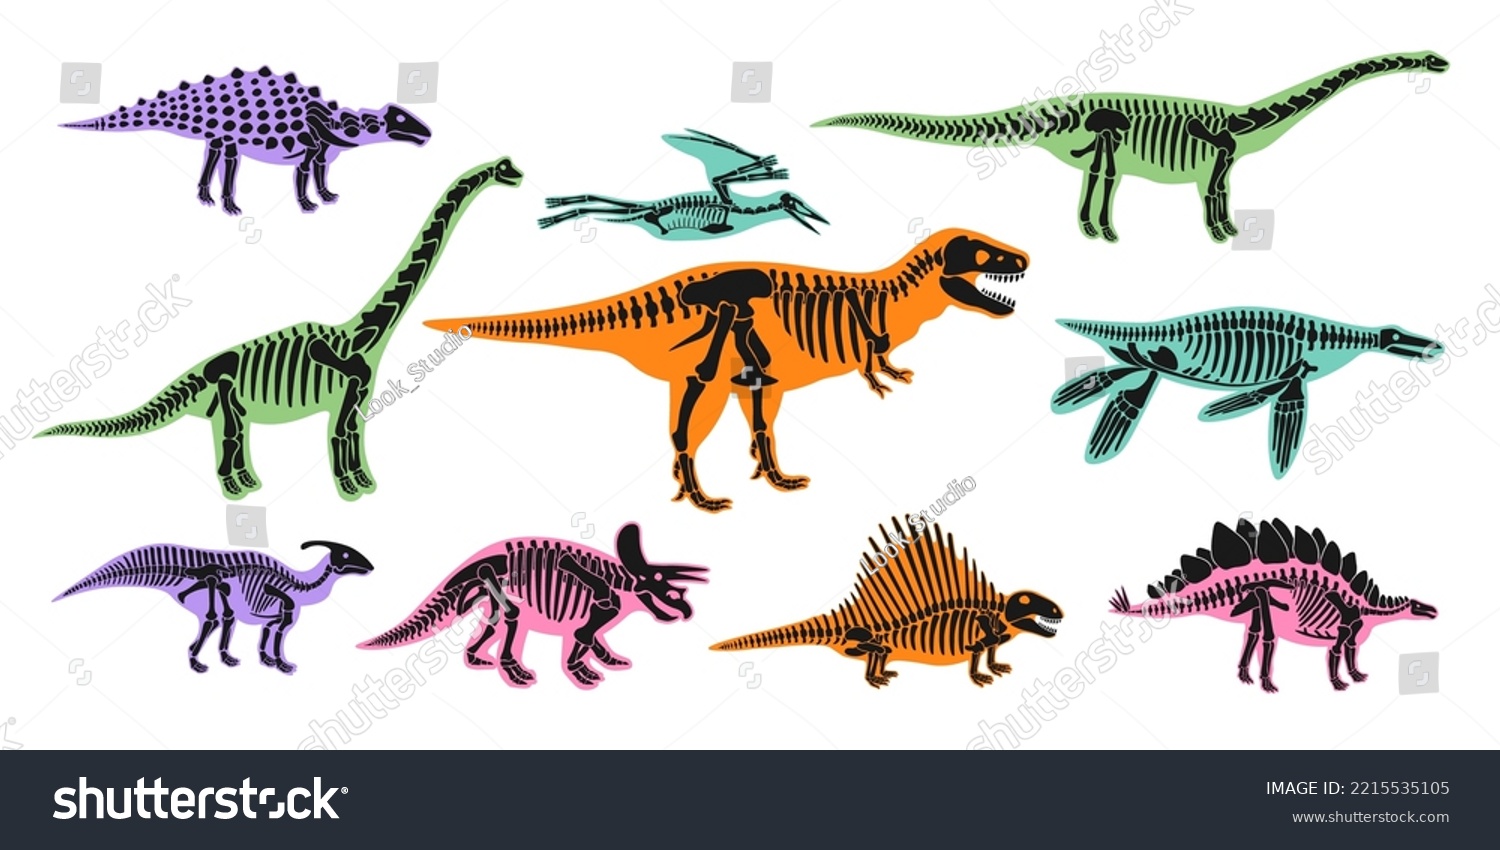 SVG of Silhouette dinosaur skeletons and bones on colorful shadows shapes set. Triceratops, tyrannosaurus, brahiosaurus, velociraptor, stegosaurus, parasaurolophus. Vector illustration svg